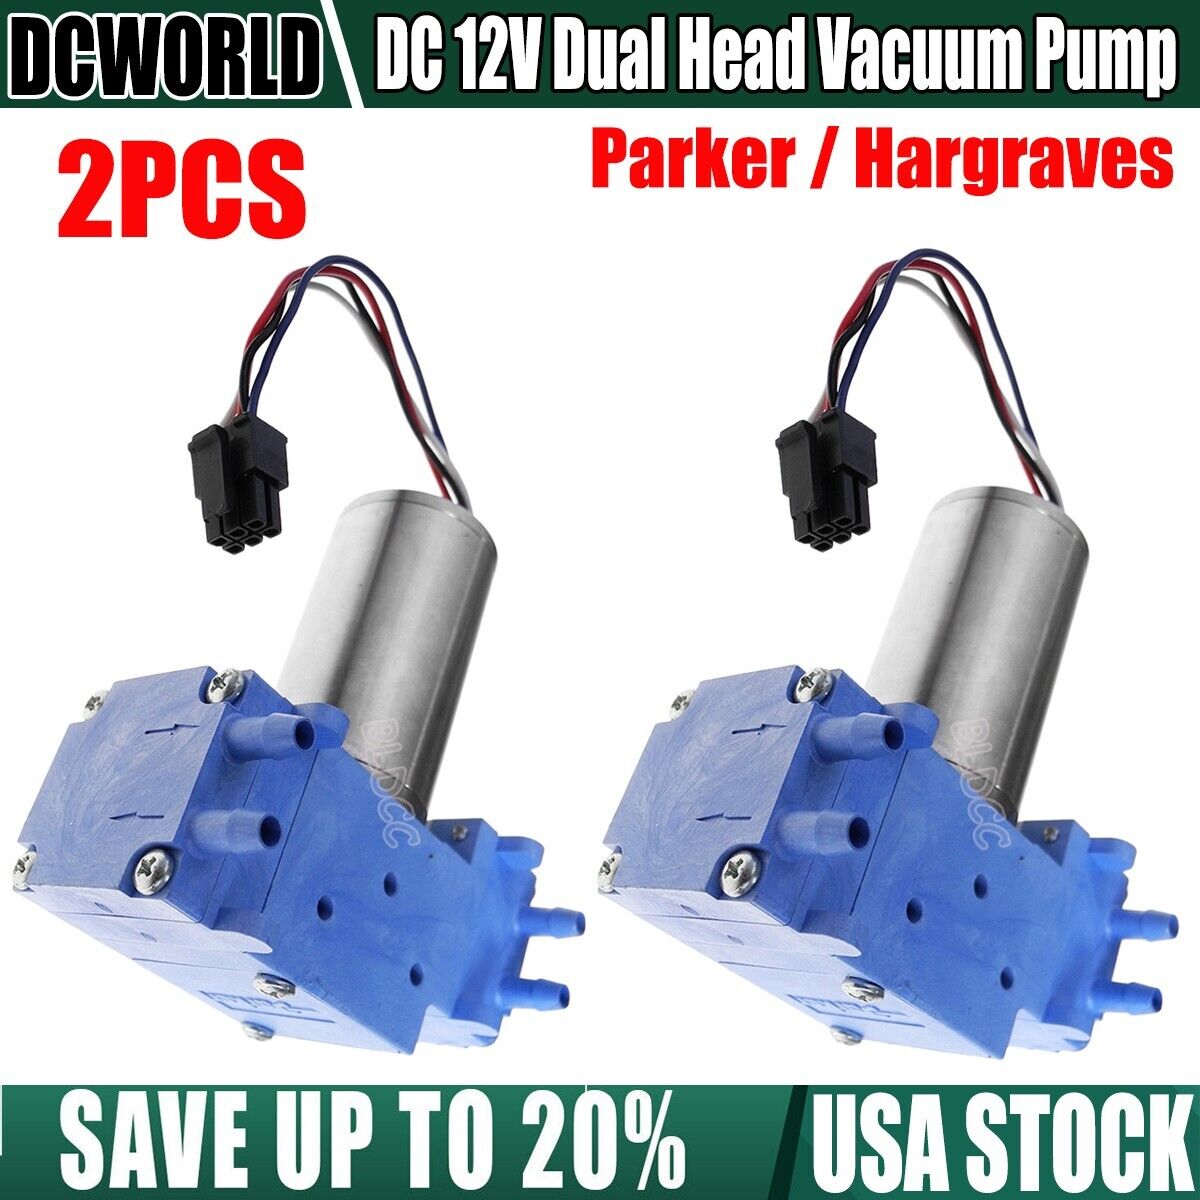 2PCS Parker / Hargraves DC12V Dual Head Brushless Air Pump Vacuum Diaphragm Pump